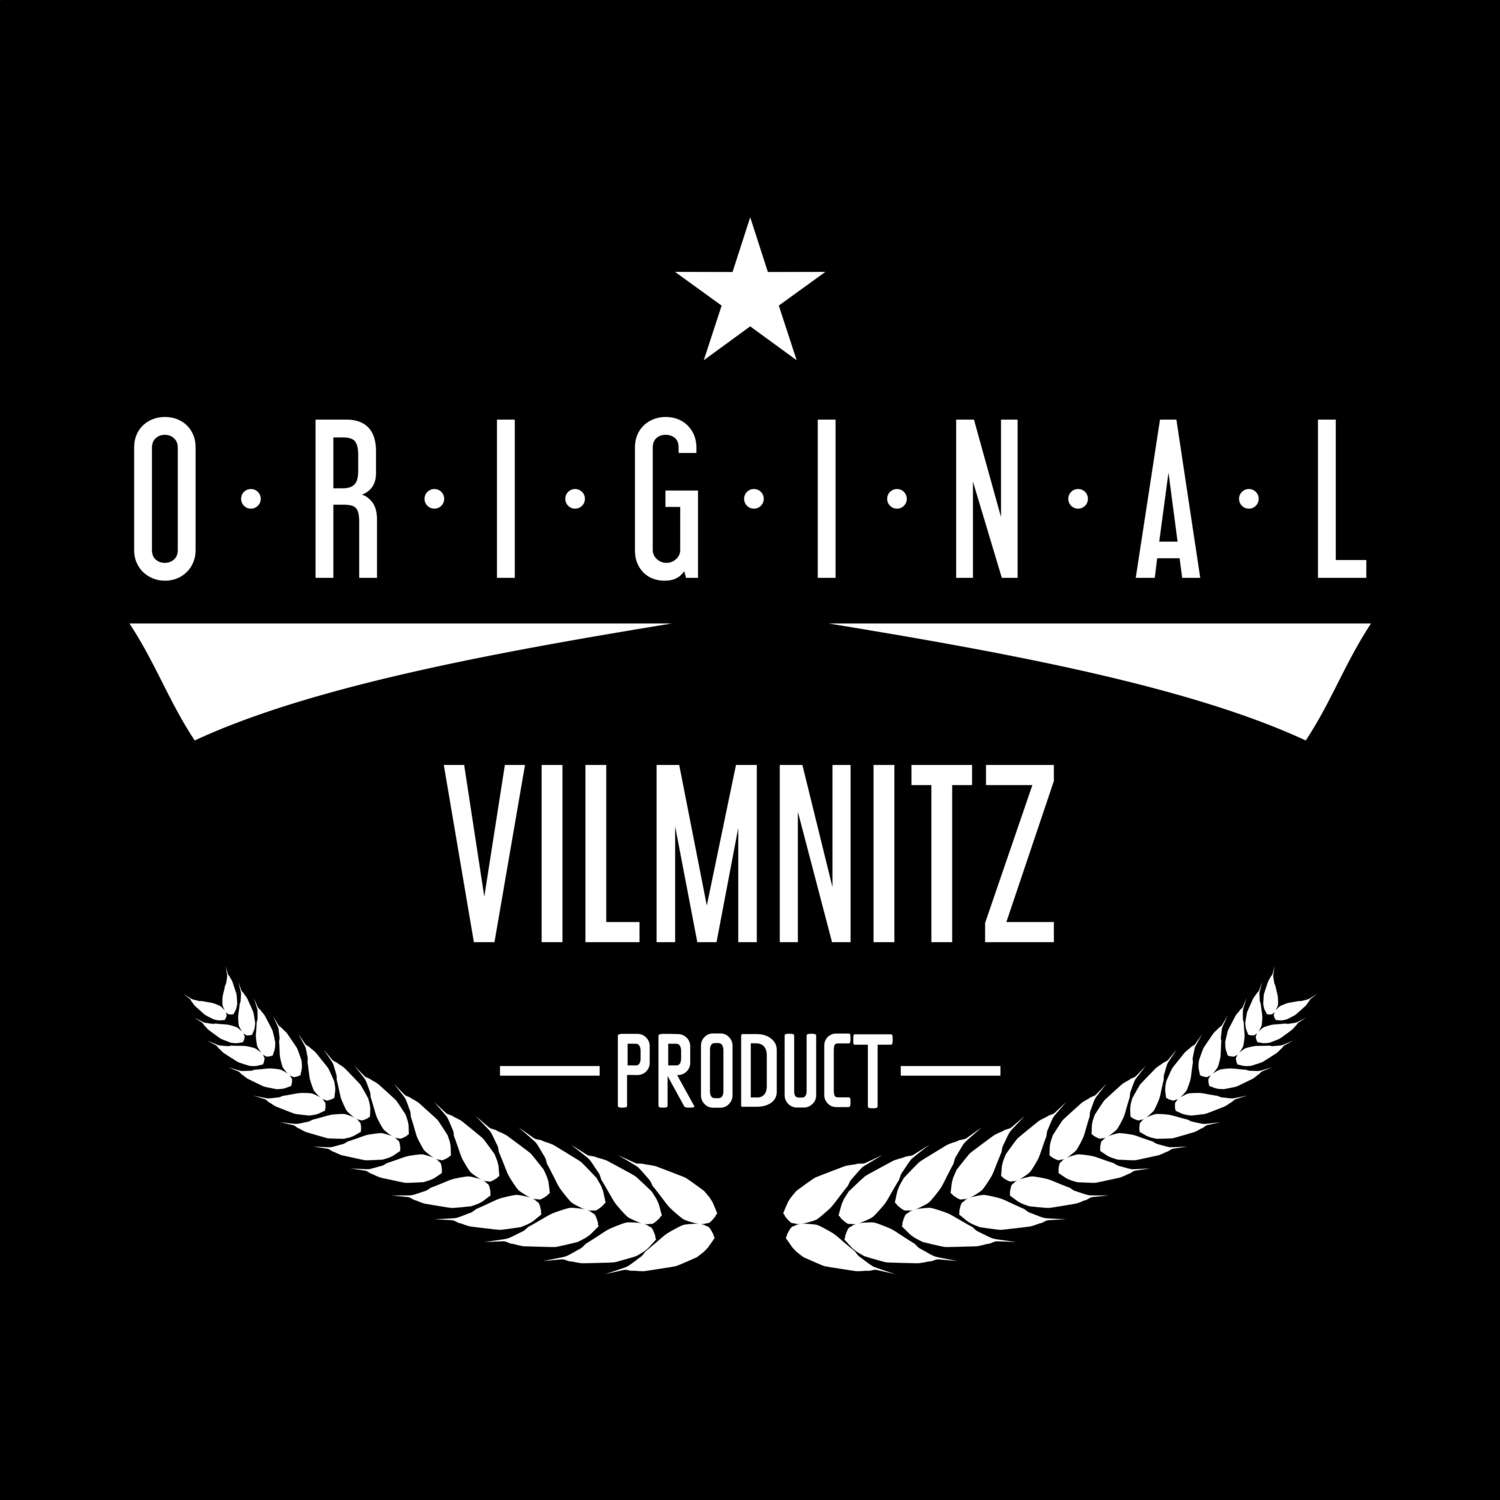 Vilmnitz T-Shirt »Original Product«